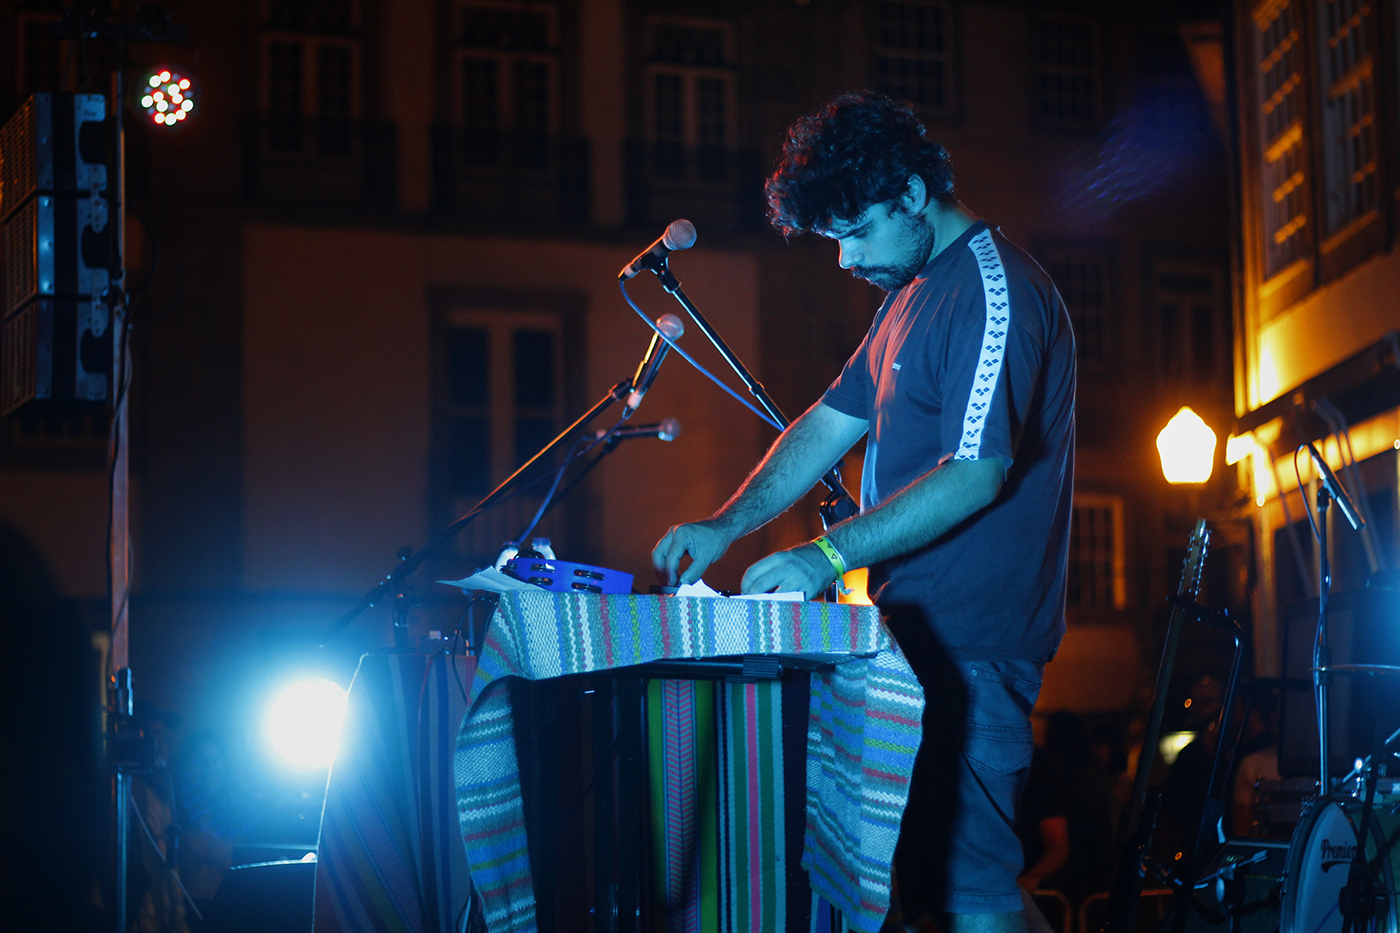 Suave Fest convivio guimarães Photography  rock music Helder Oliveira festival bands